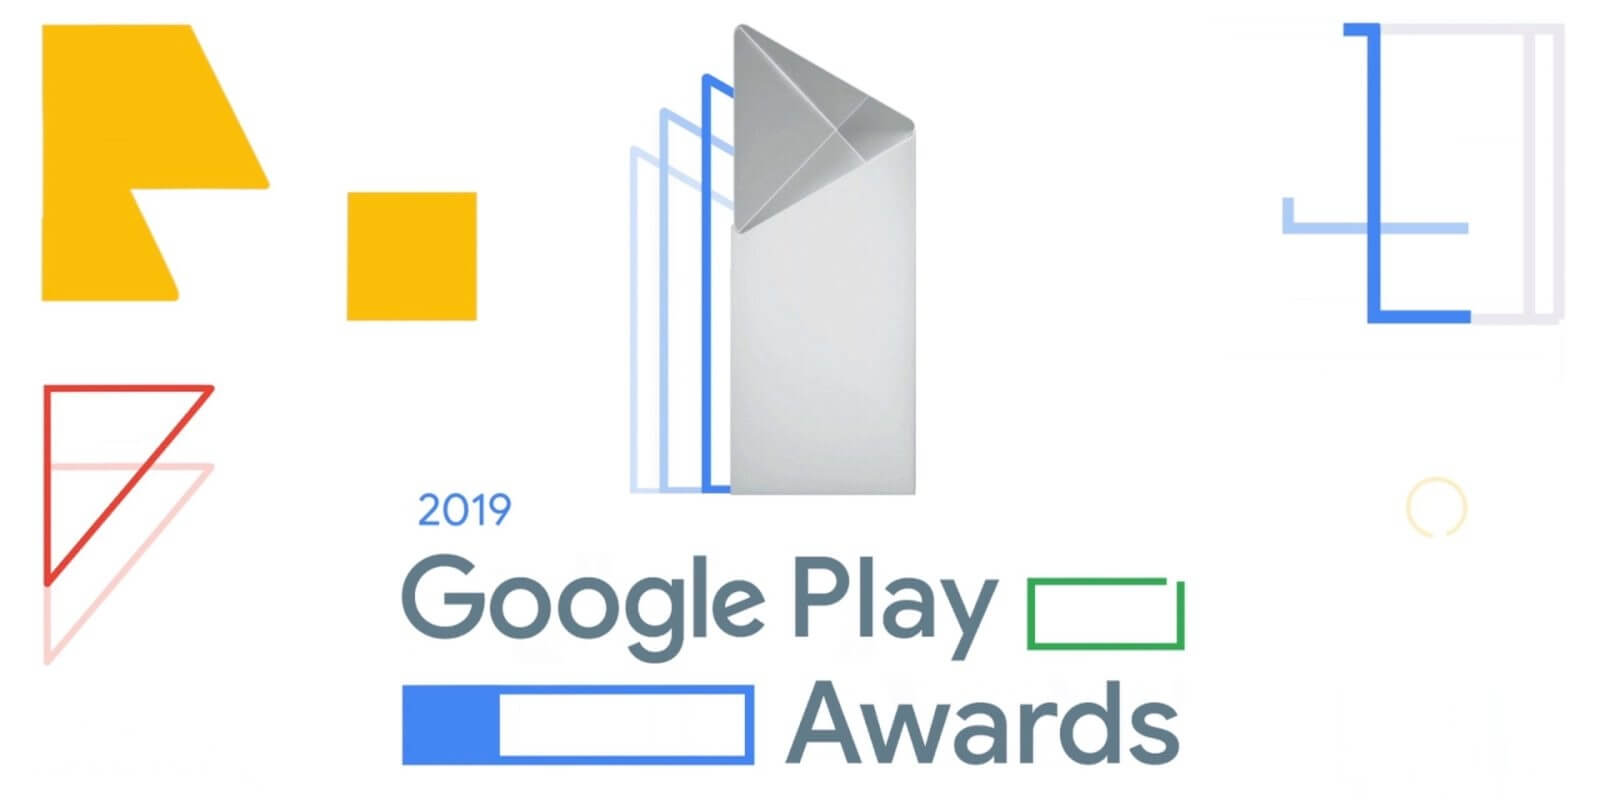 Cabecera Google Play Awards 2019